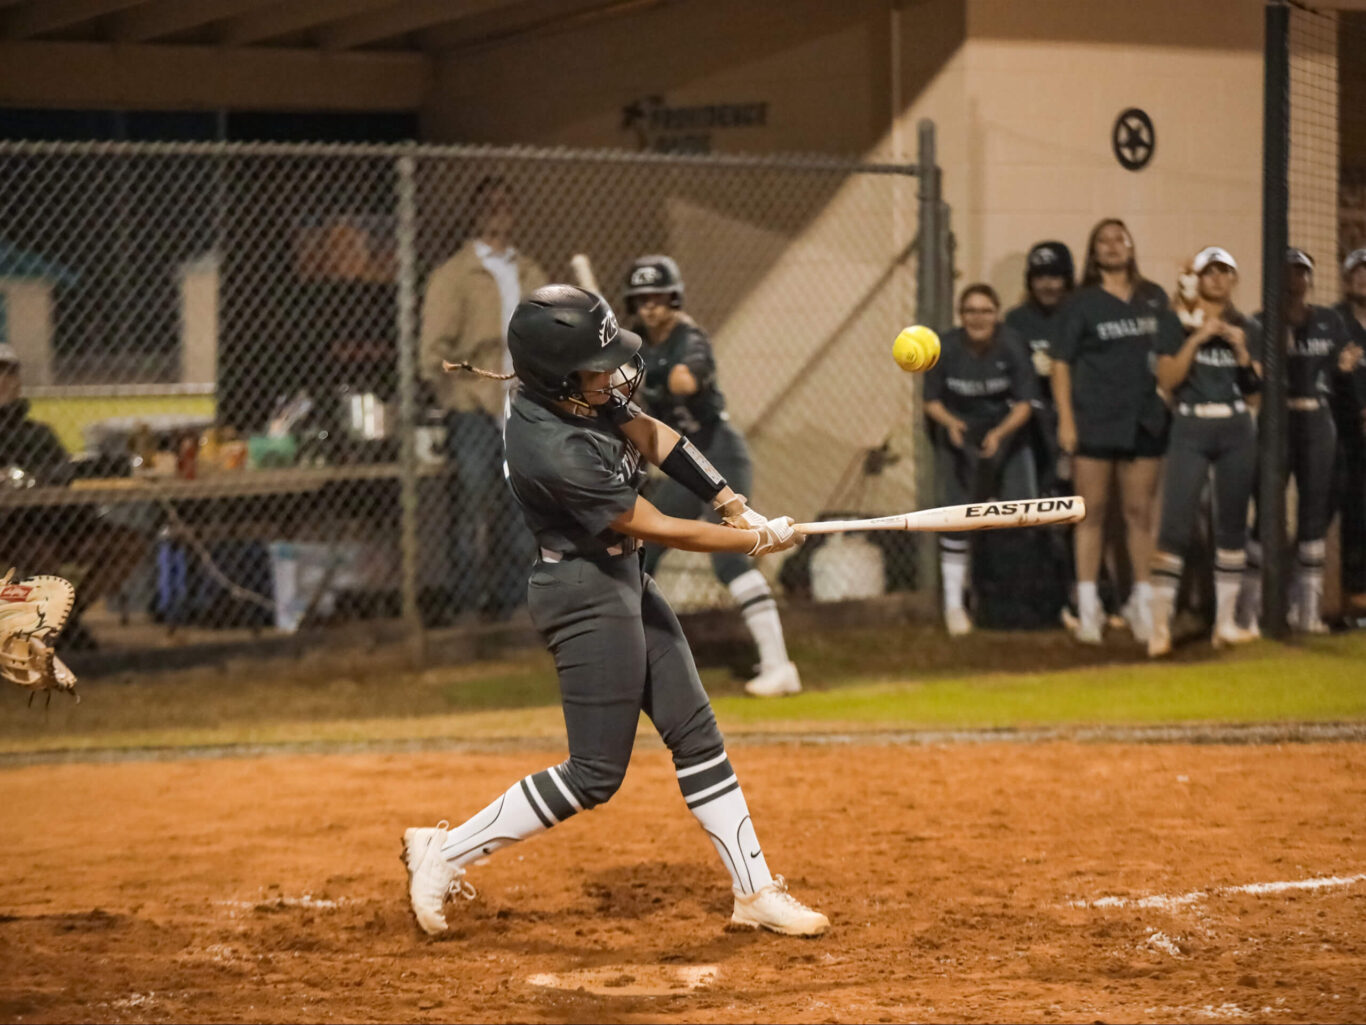 A softball player, a girl, swinging her bat at a ball.